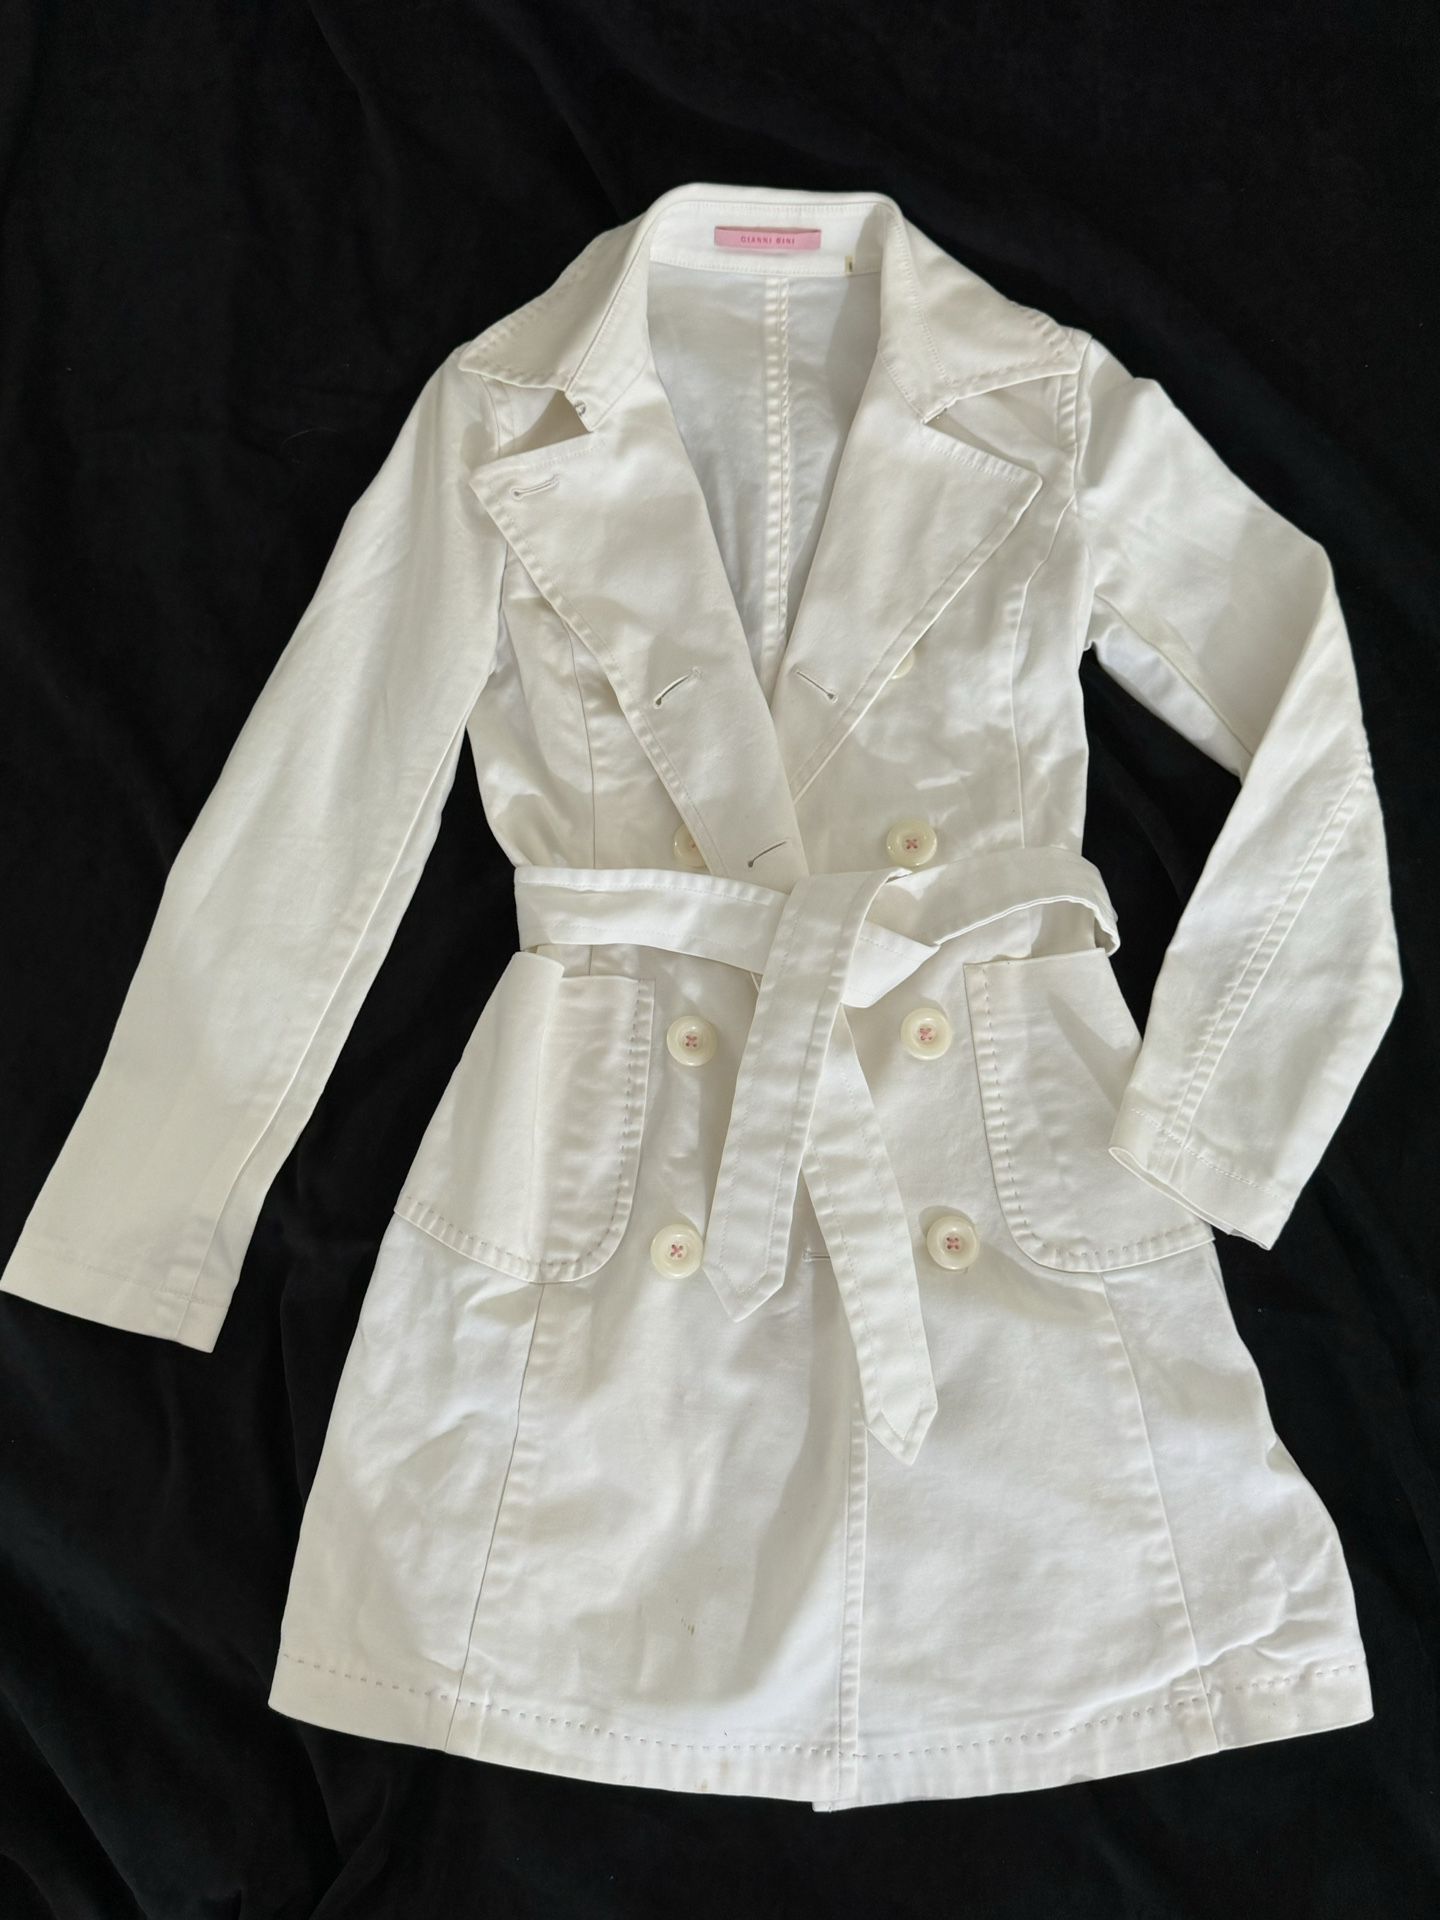 Coat gianni bini white trench coat lightweight jacket NEW W/o tags XS petite GB Vintage Classic